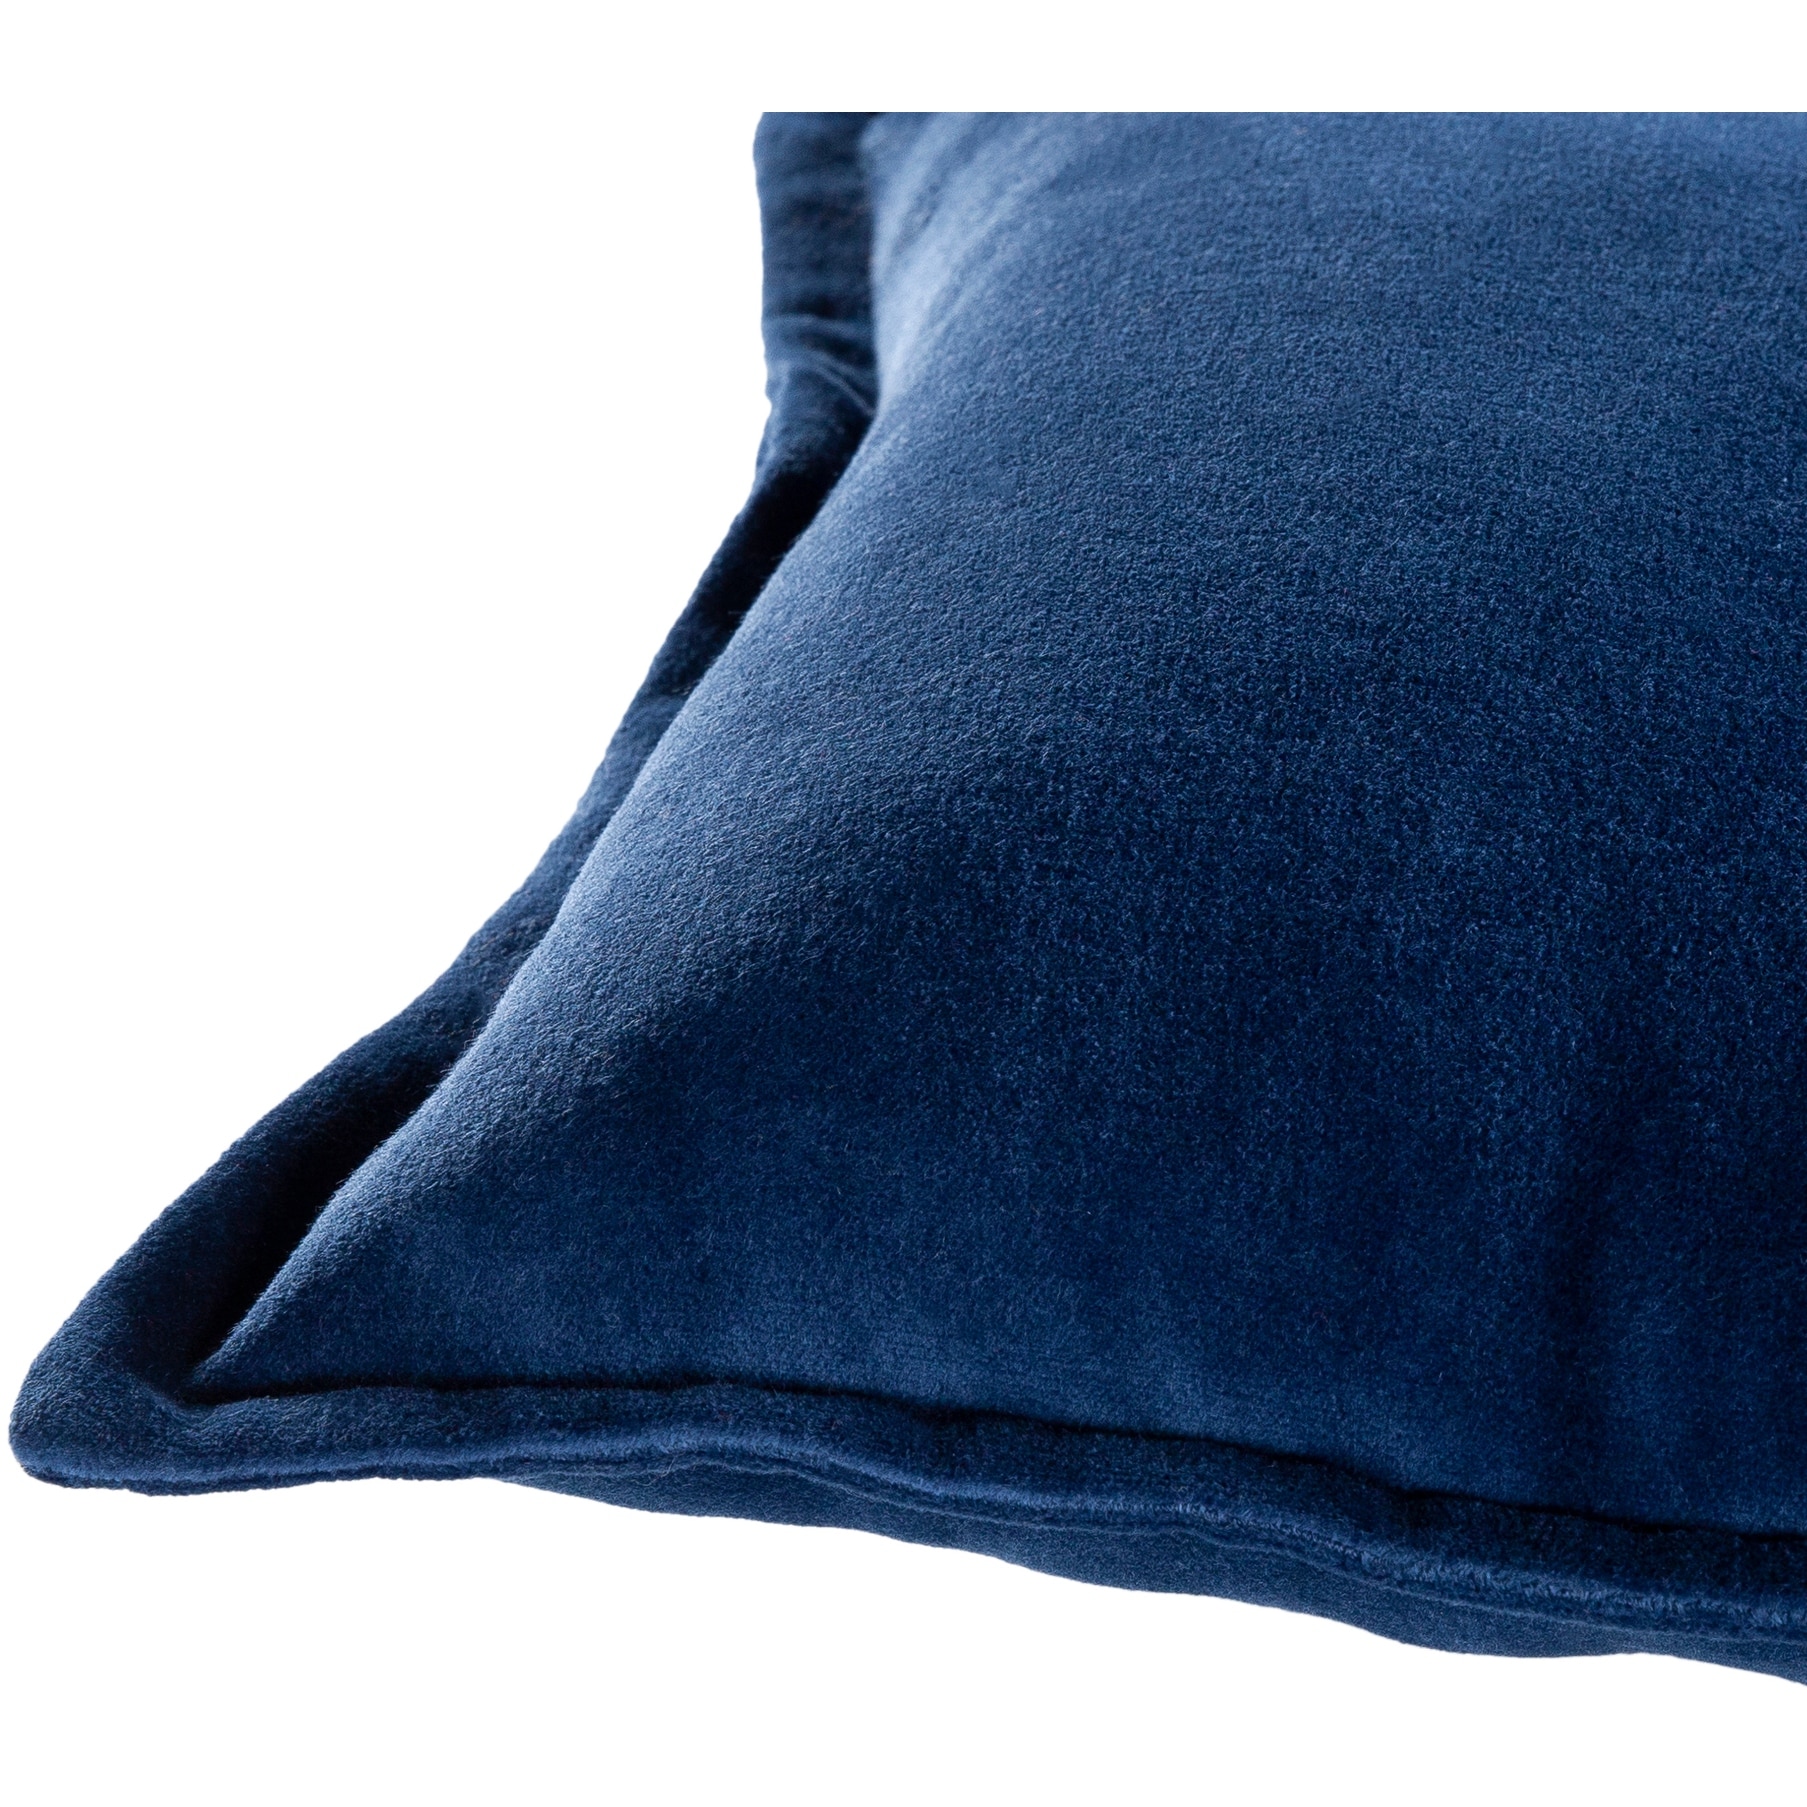 Artistic Weavers Etta Striped Coastal 14x24-inch Lumbar Throw Pillow - Bed  Bath & Beyond - 30341985